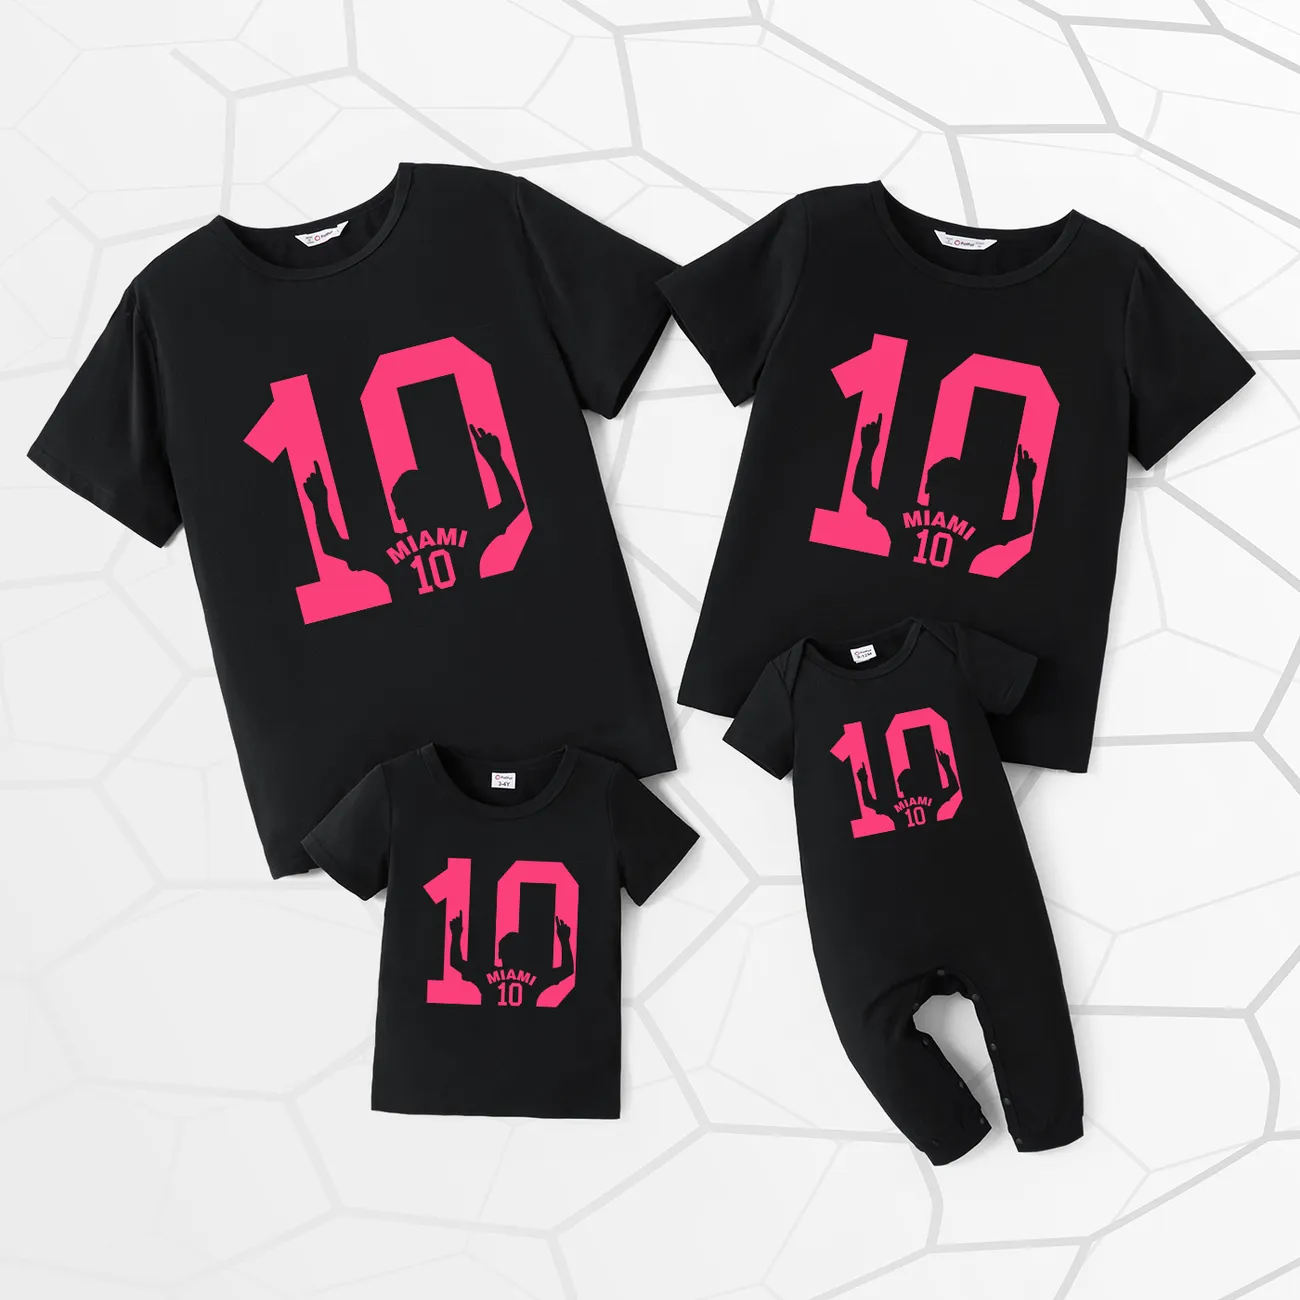 Family Matching Pink "10" Print Short-sleeve Tops Black big image 1